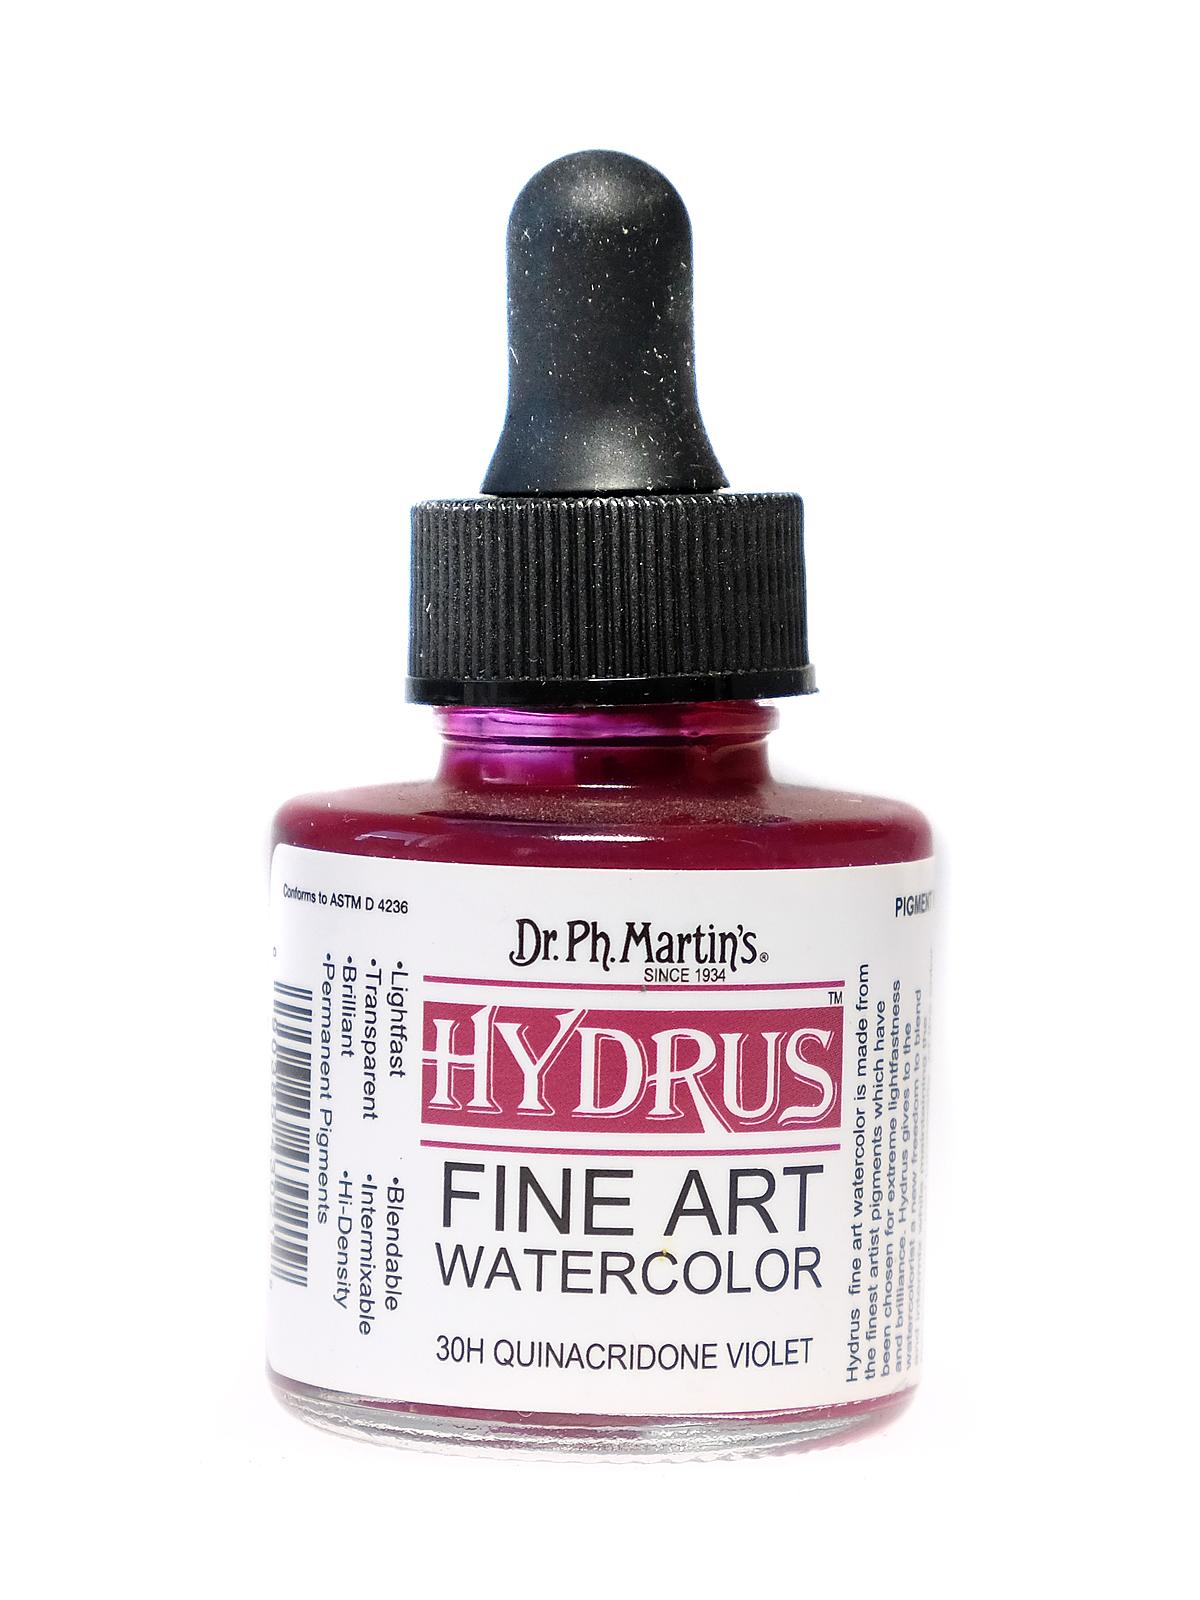 Hydrus Fine Art Watercolor Quinacridone Violet